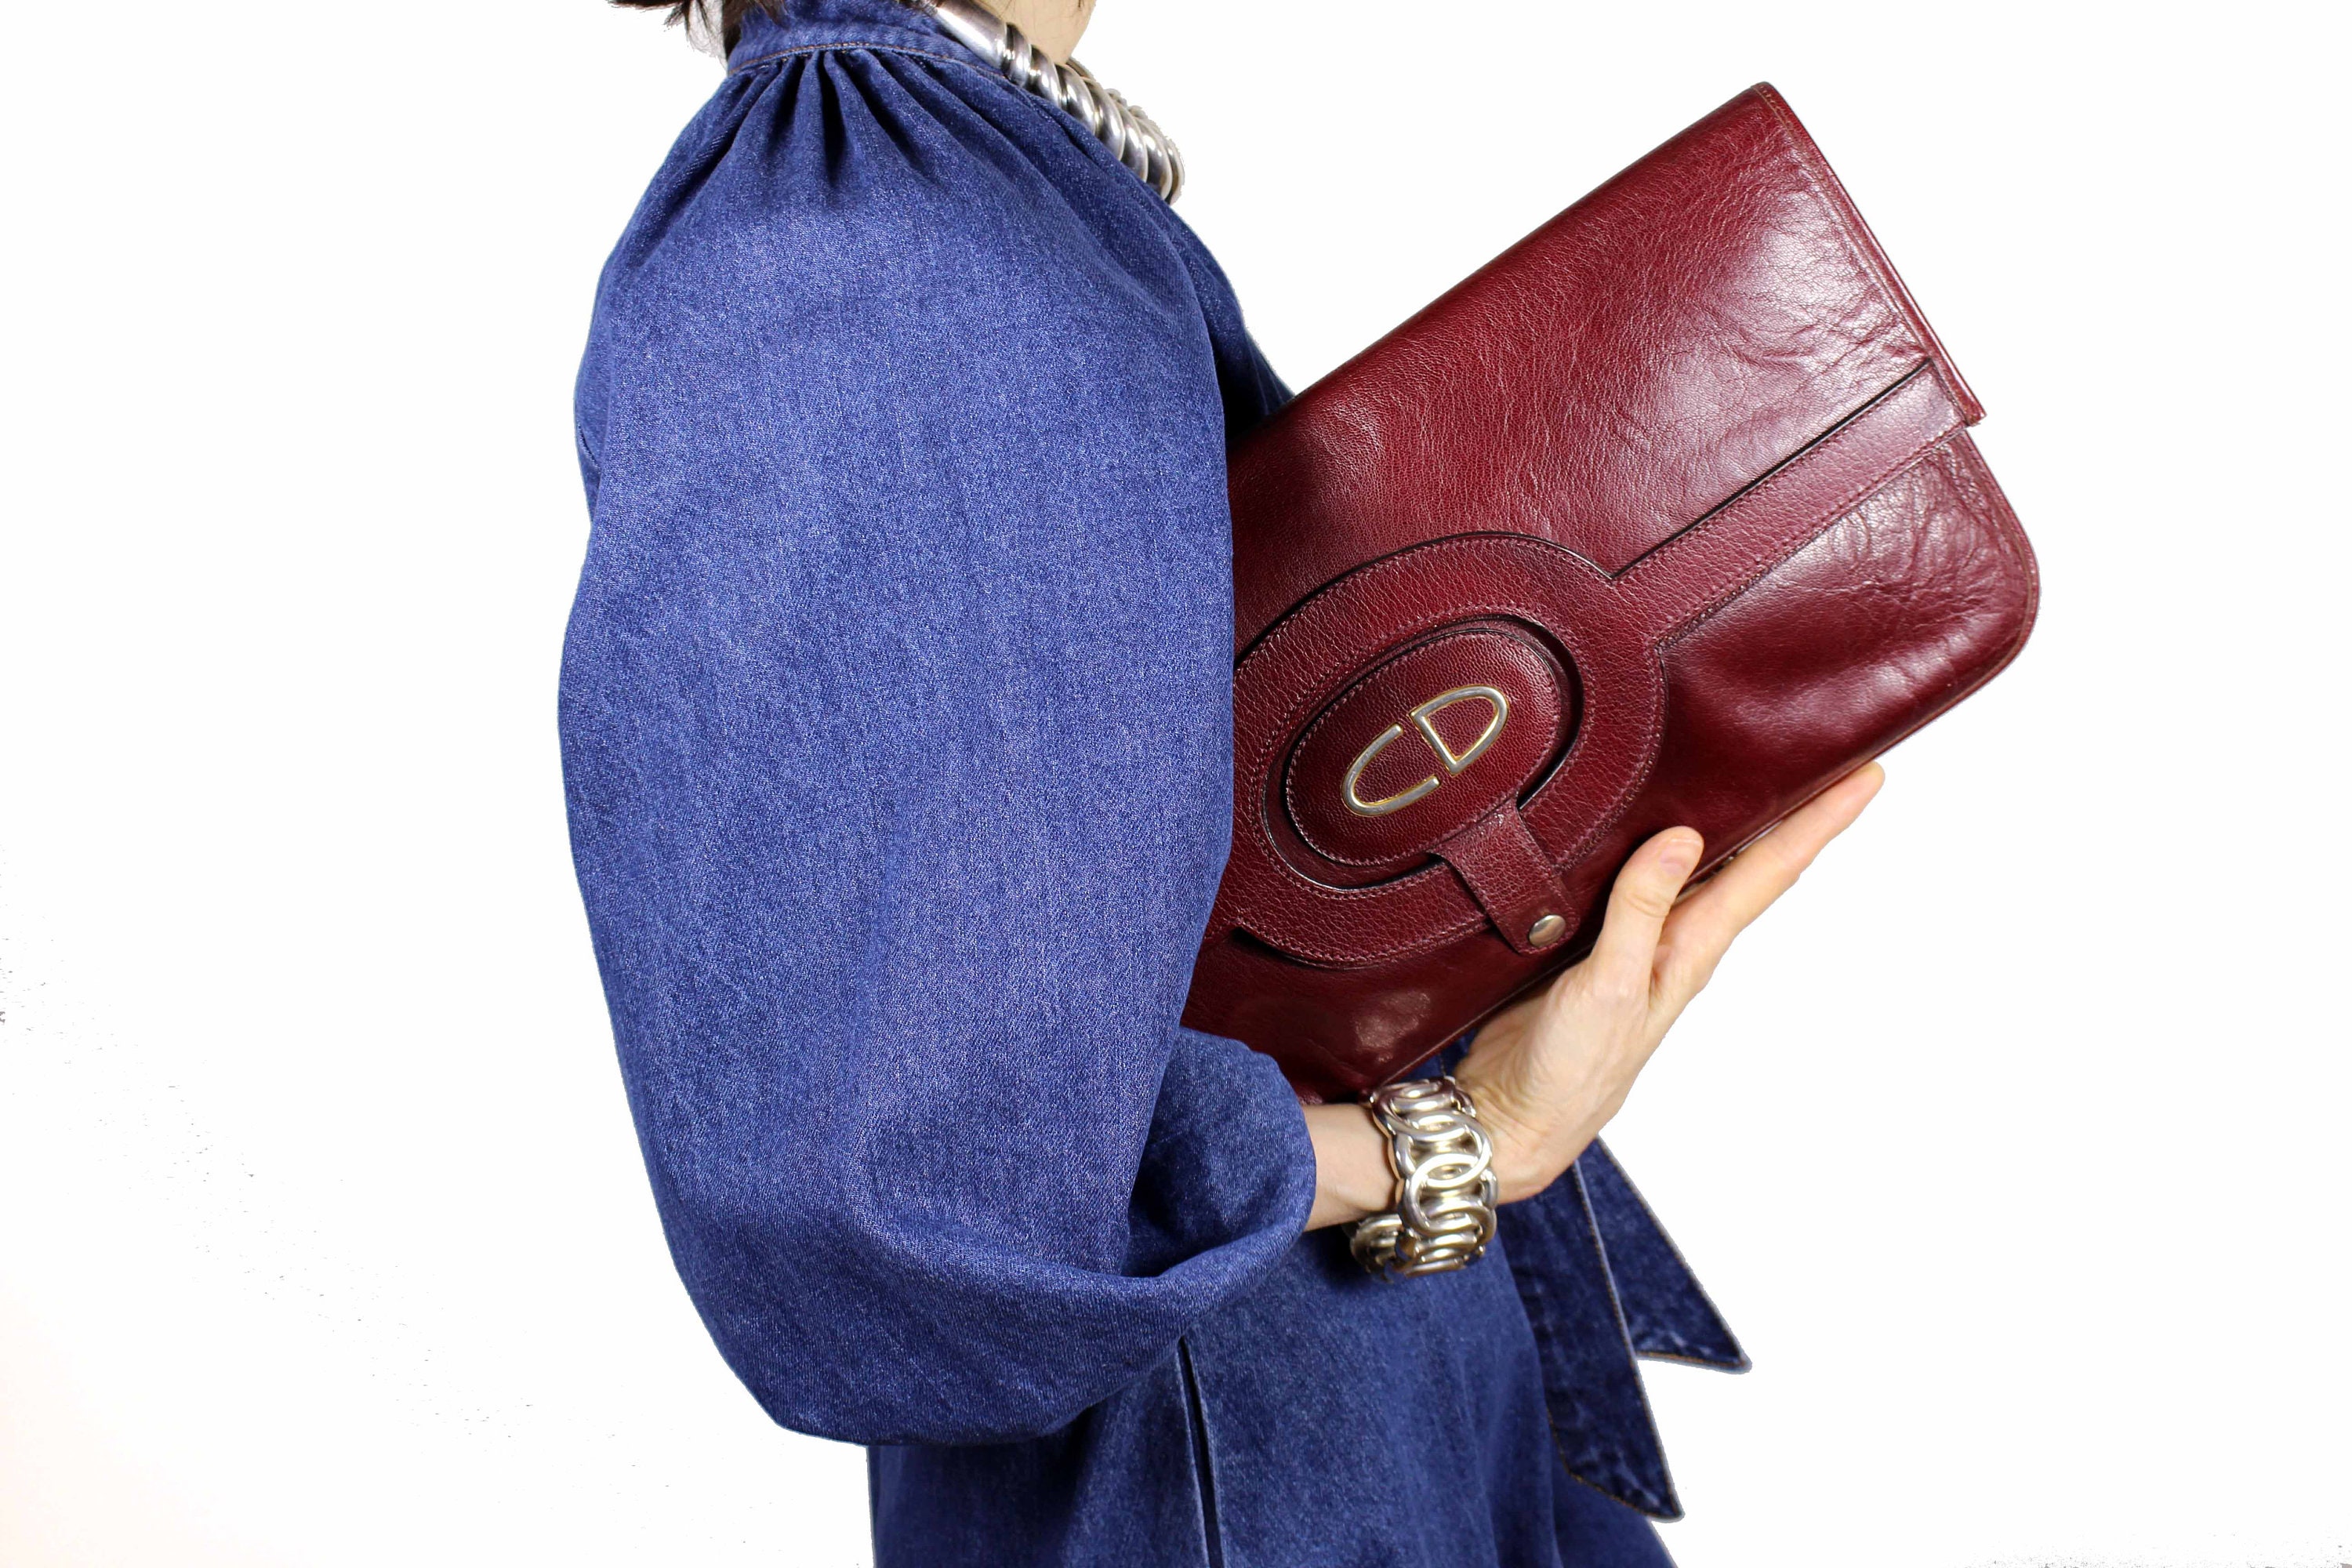 Brown crocodile skin handbag with flap and decorative clasp – Vintage Carwen